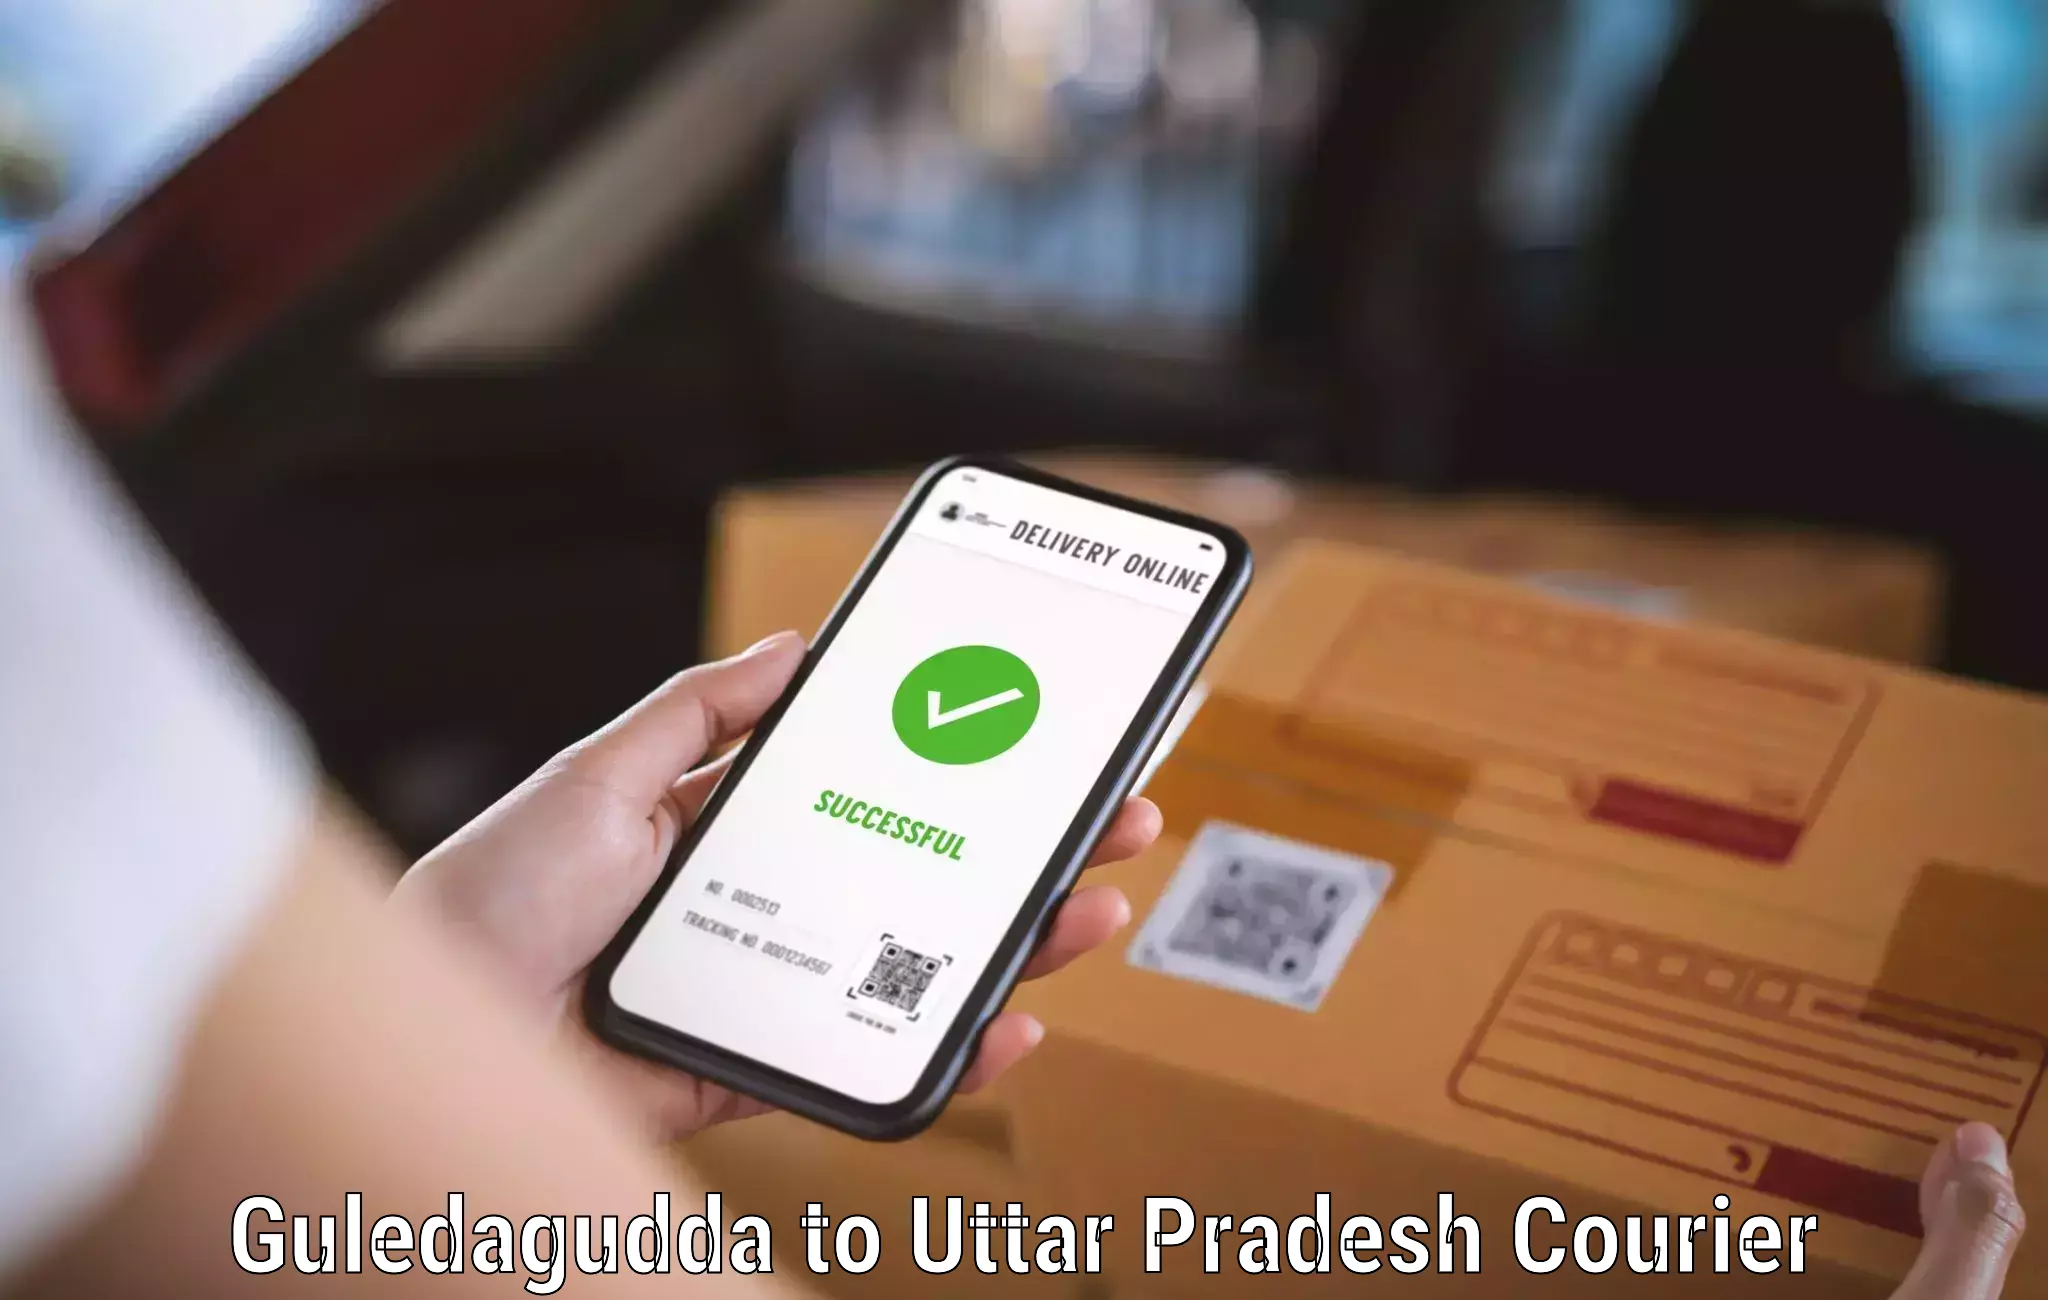 Logistics and distribution Guledagudda to Uttar Pradesh